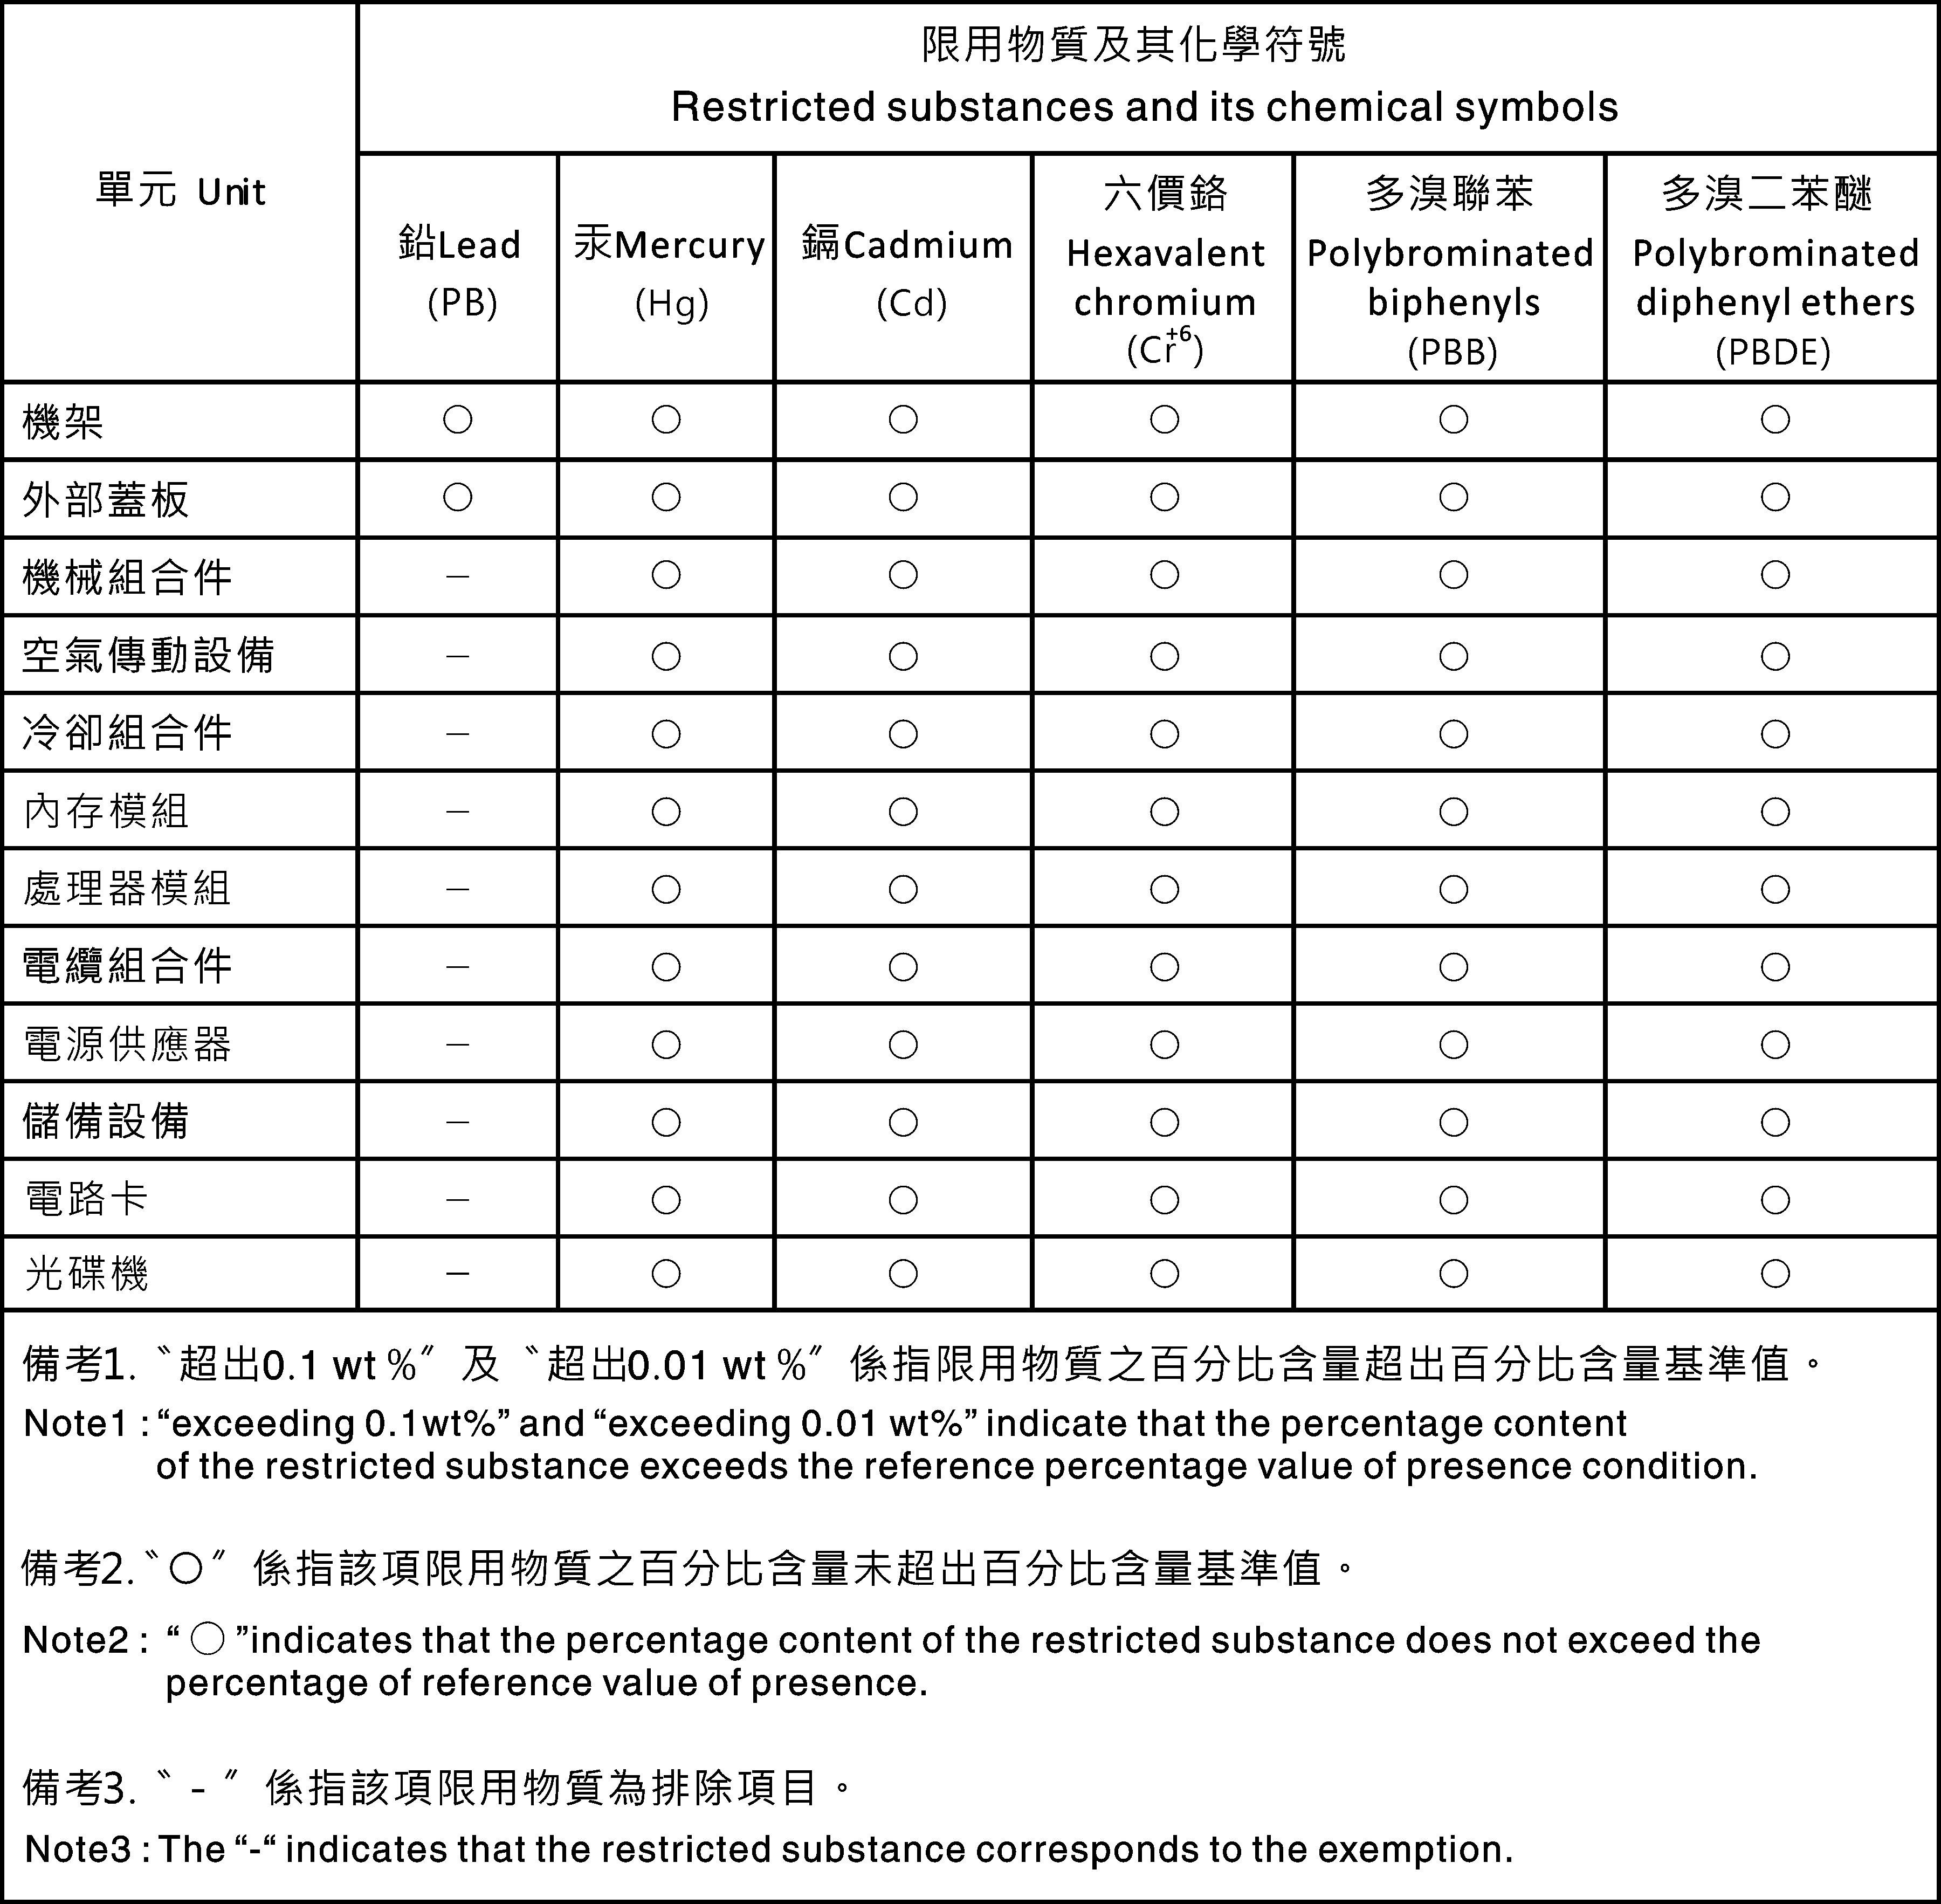 An Example of Taiwan BSMI RoHS Declaration